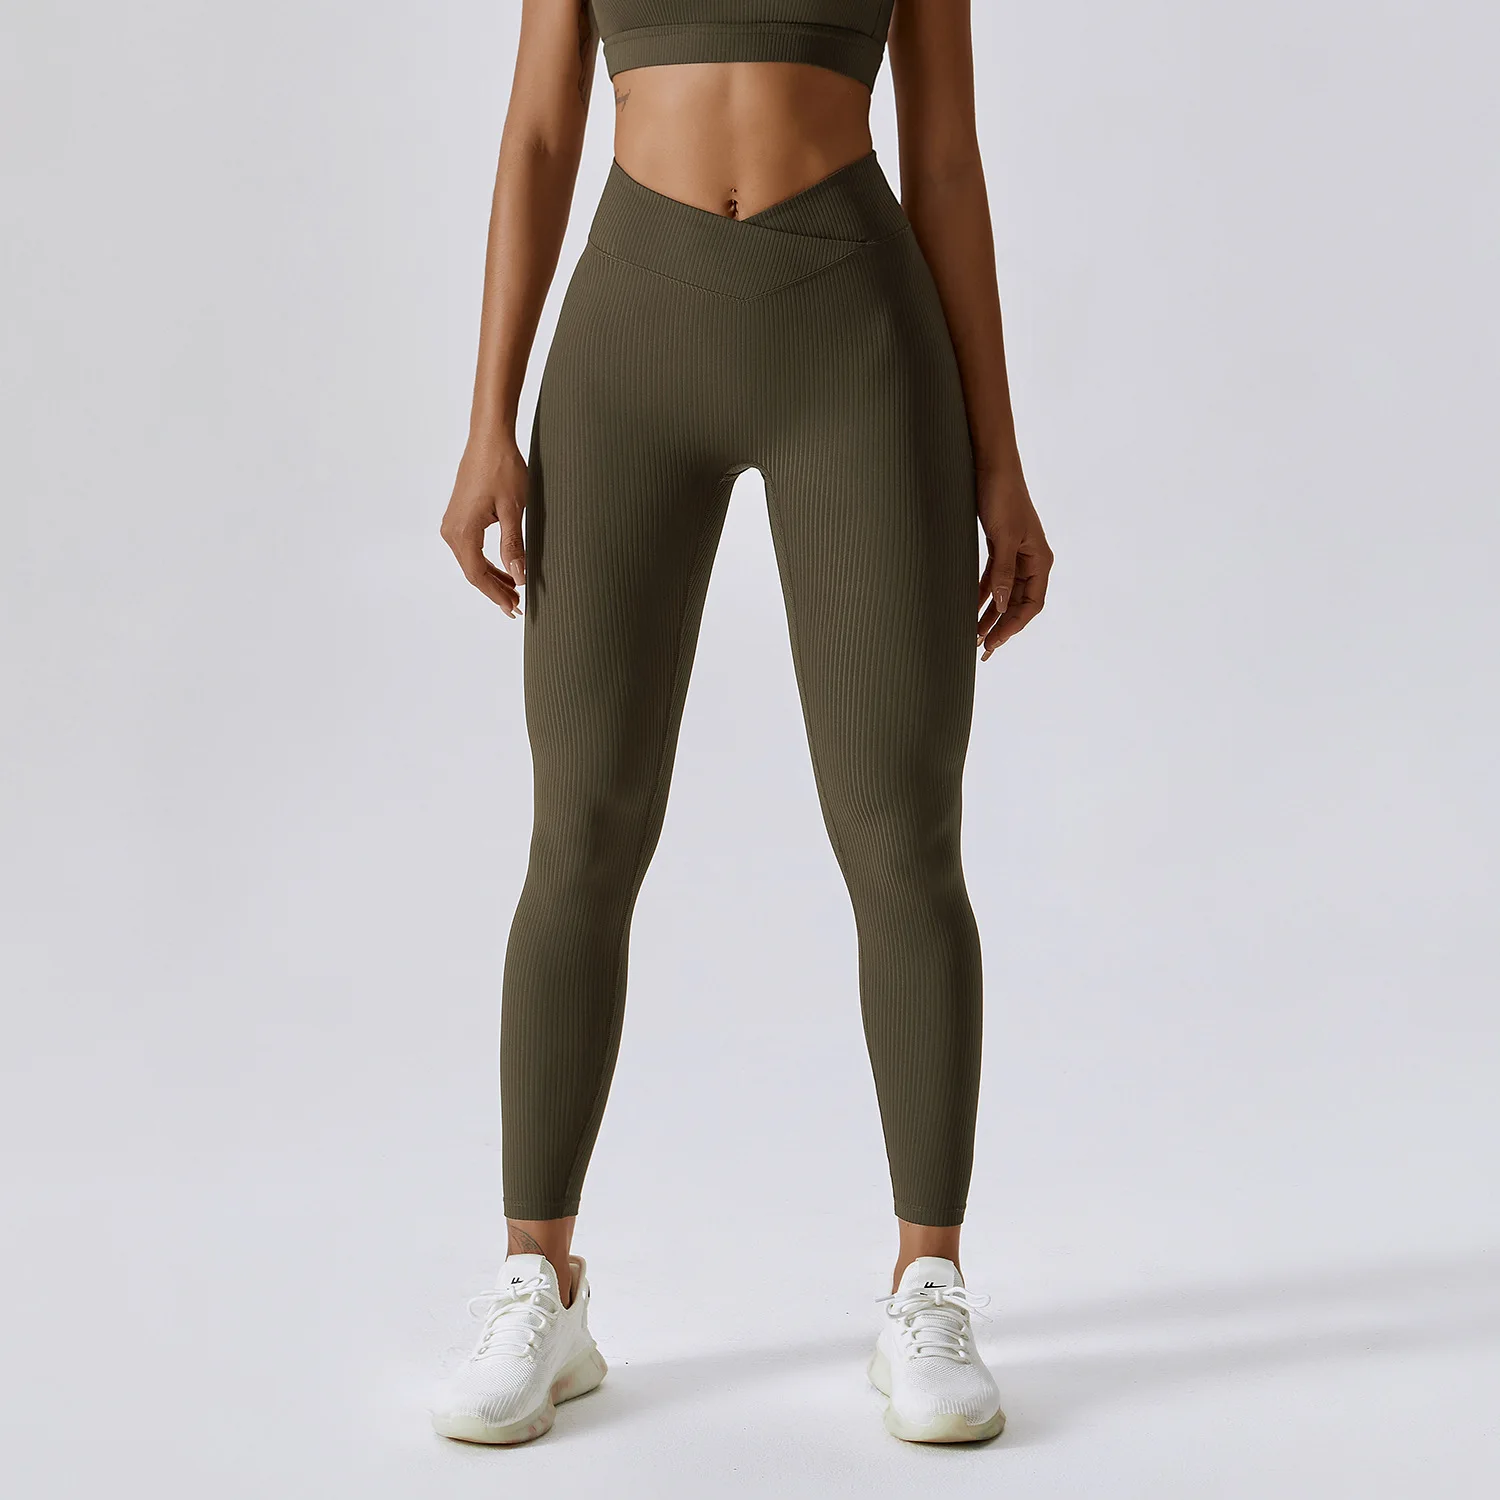 New High Waisted Yoga Pants Women Gym Leggings Sport Fitness Seamless  Female Legging Tummy Control Running Training Tights AliExpress